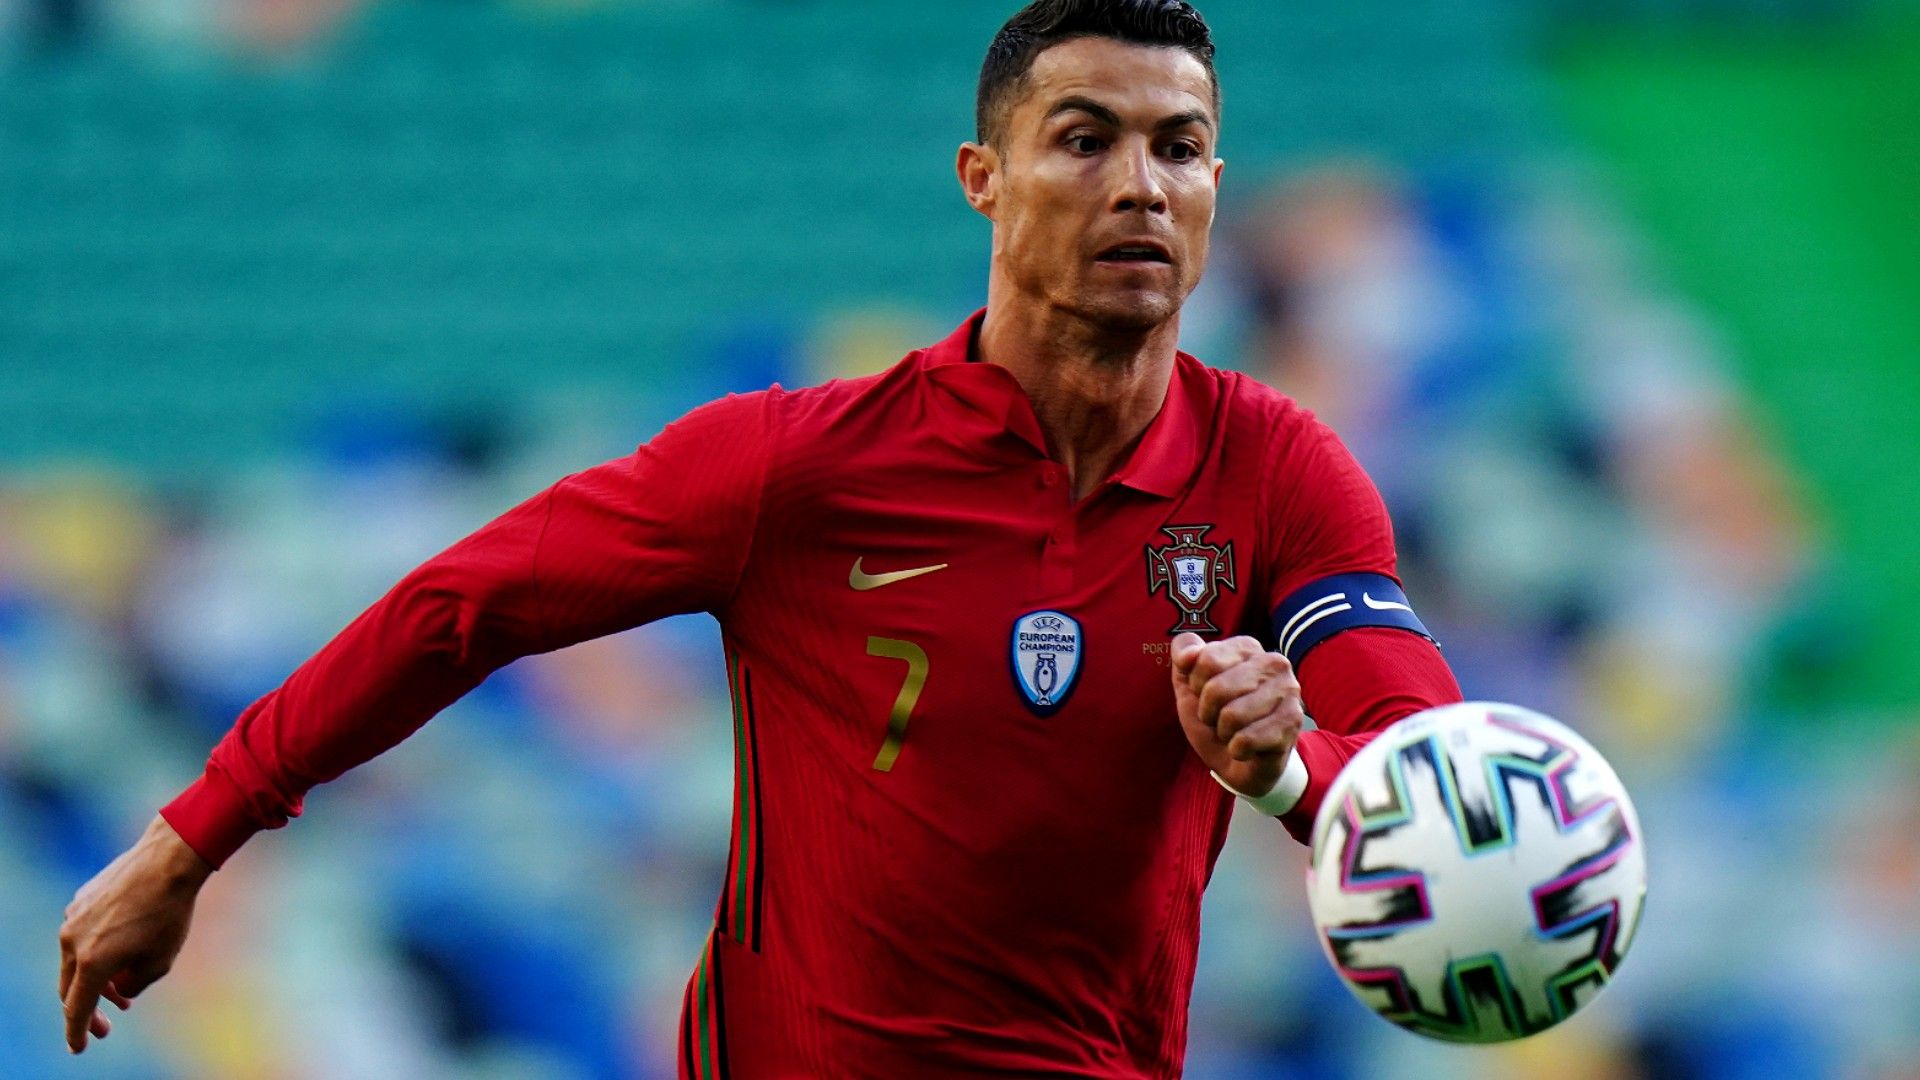 Cristiano Ronaldo setting records at Euro 2021: All the milestones by the Portugal star